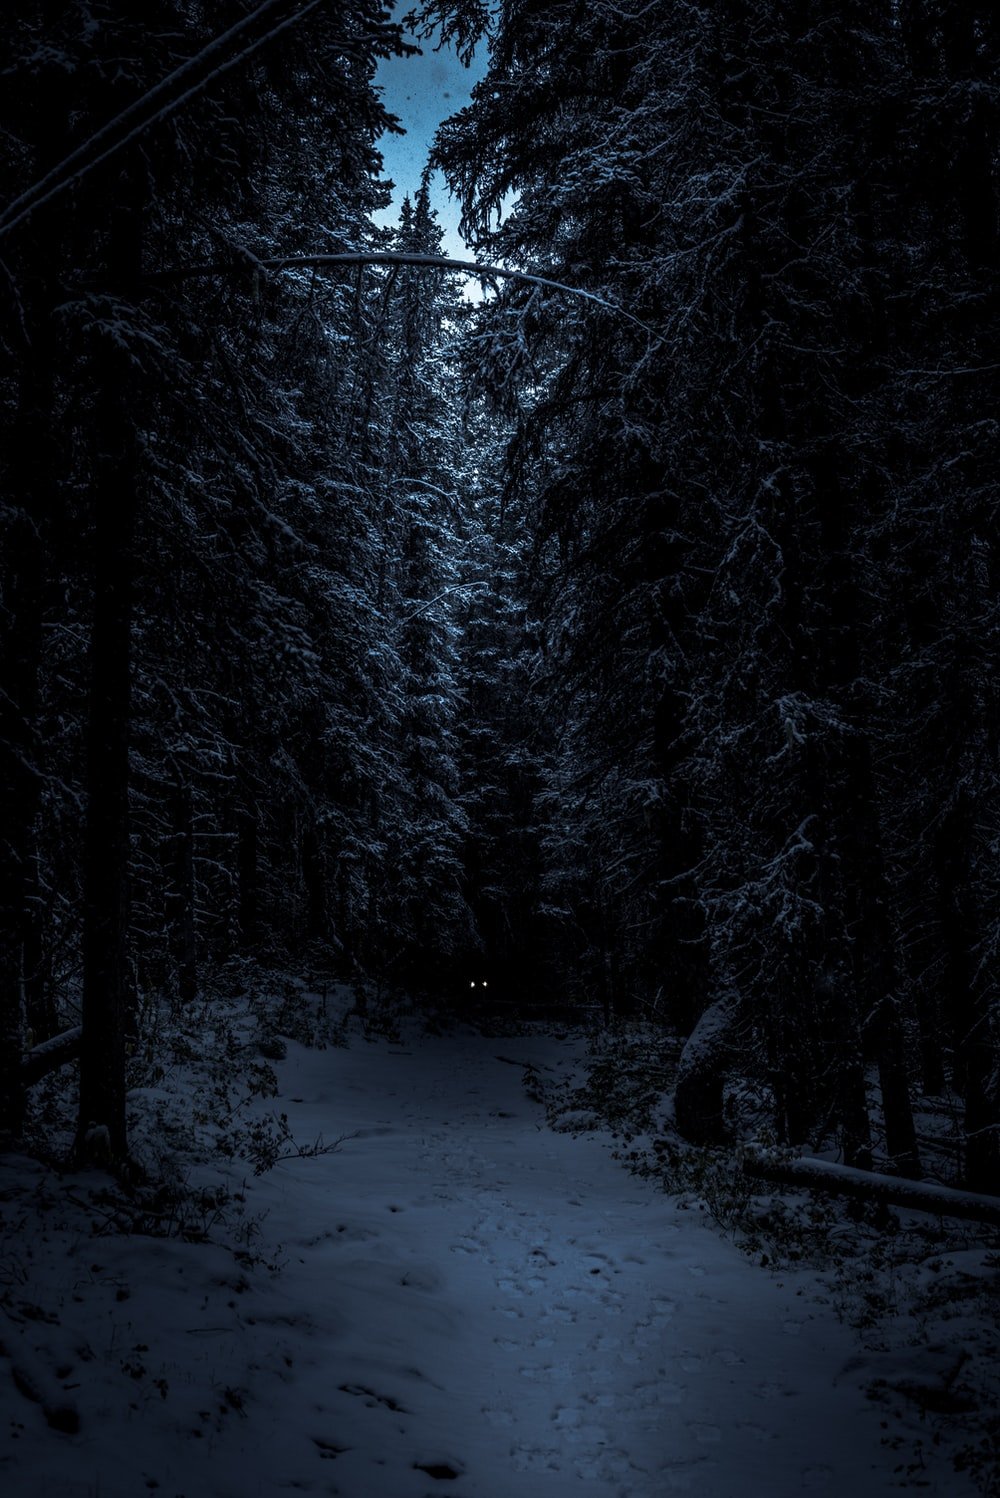 Dark Winter Picture. Download Free Image